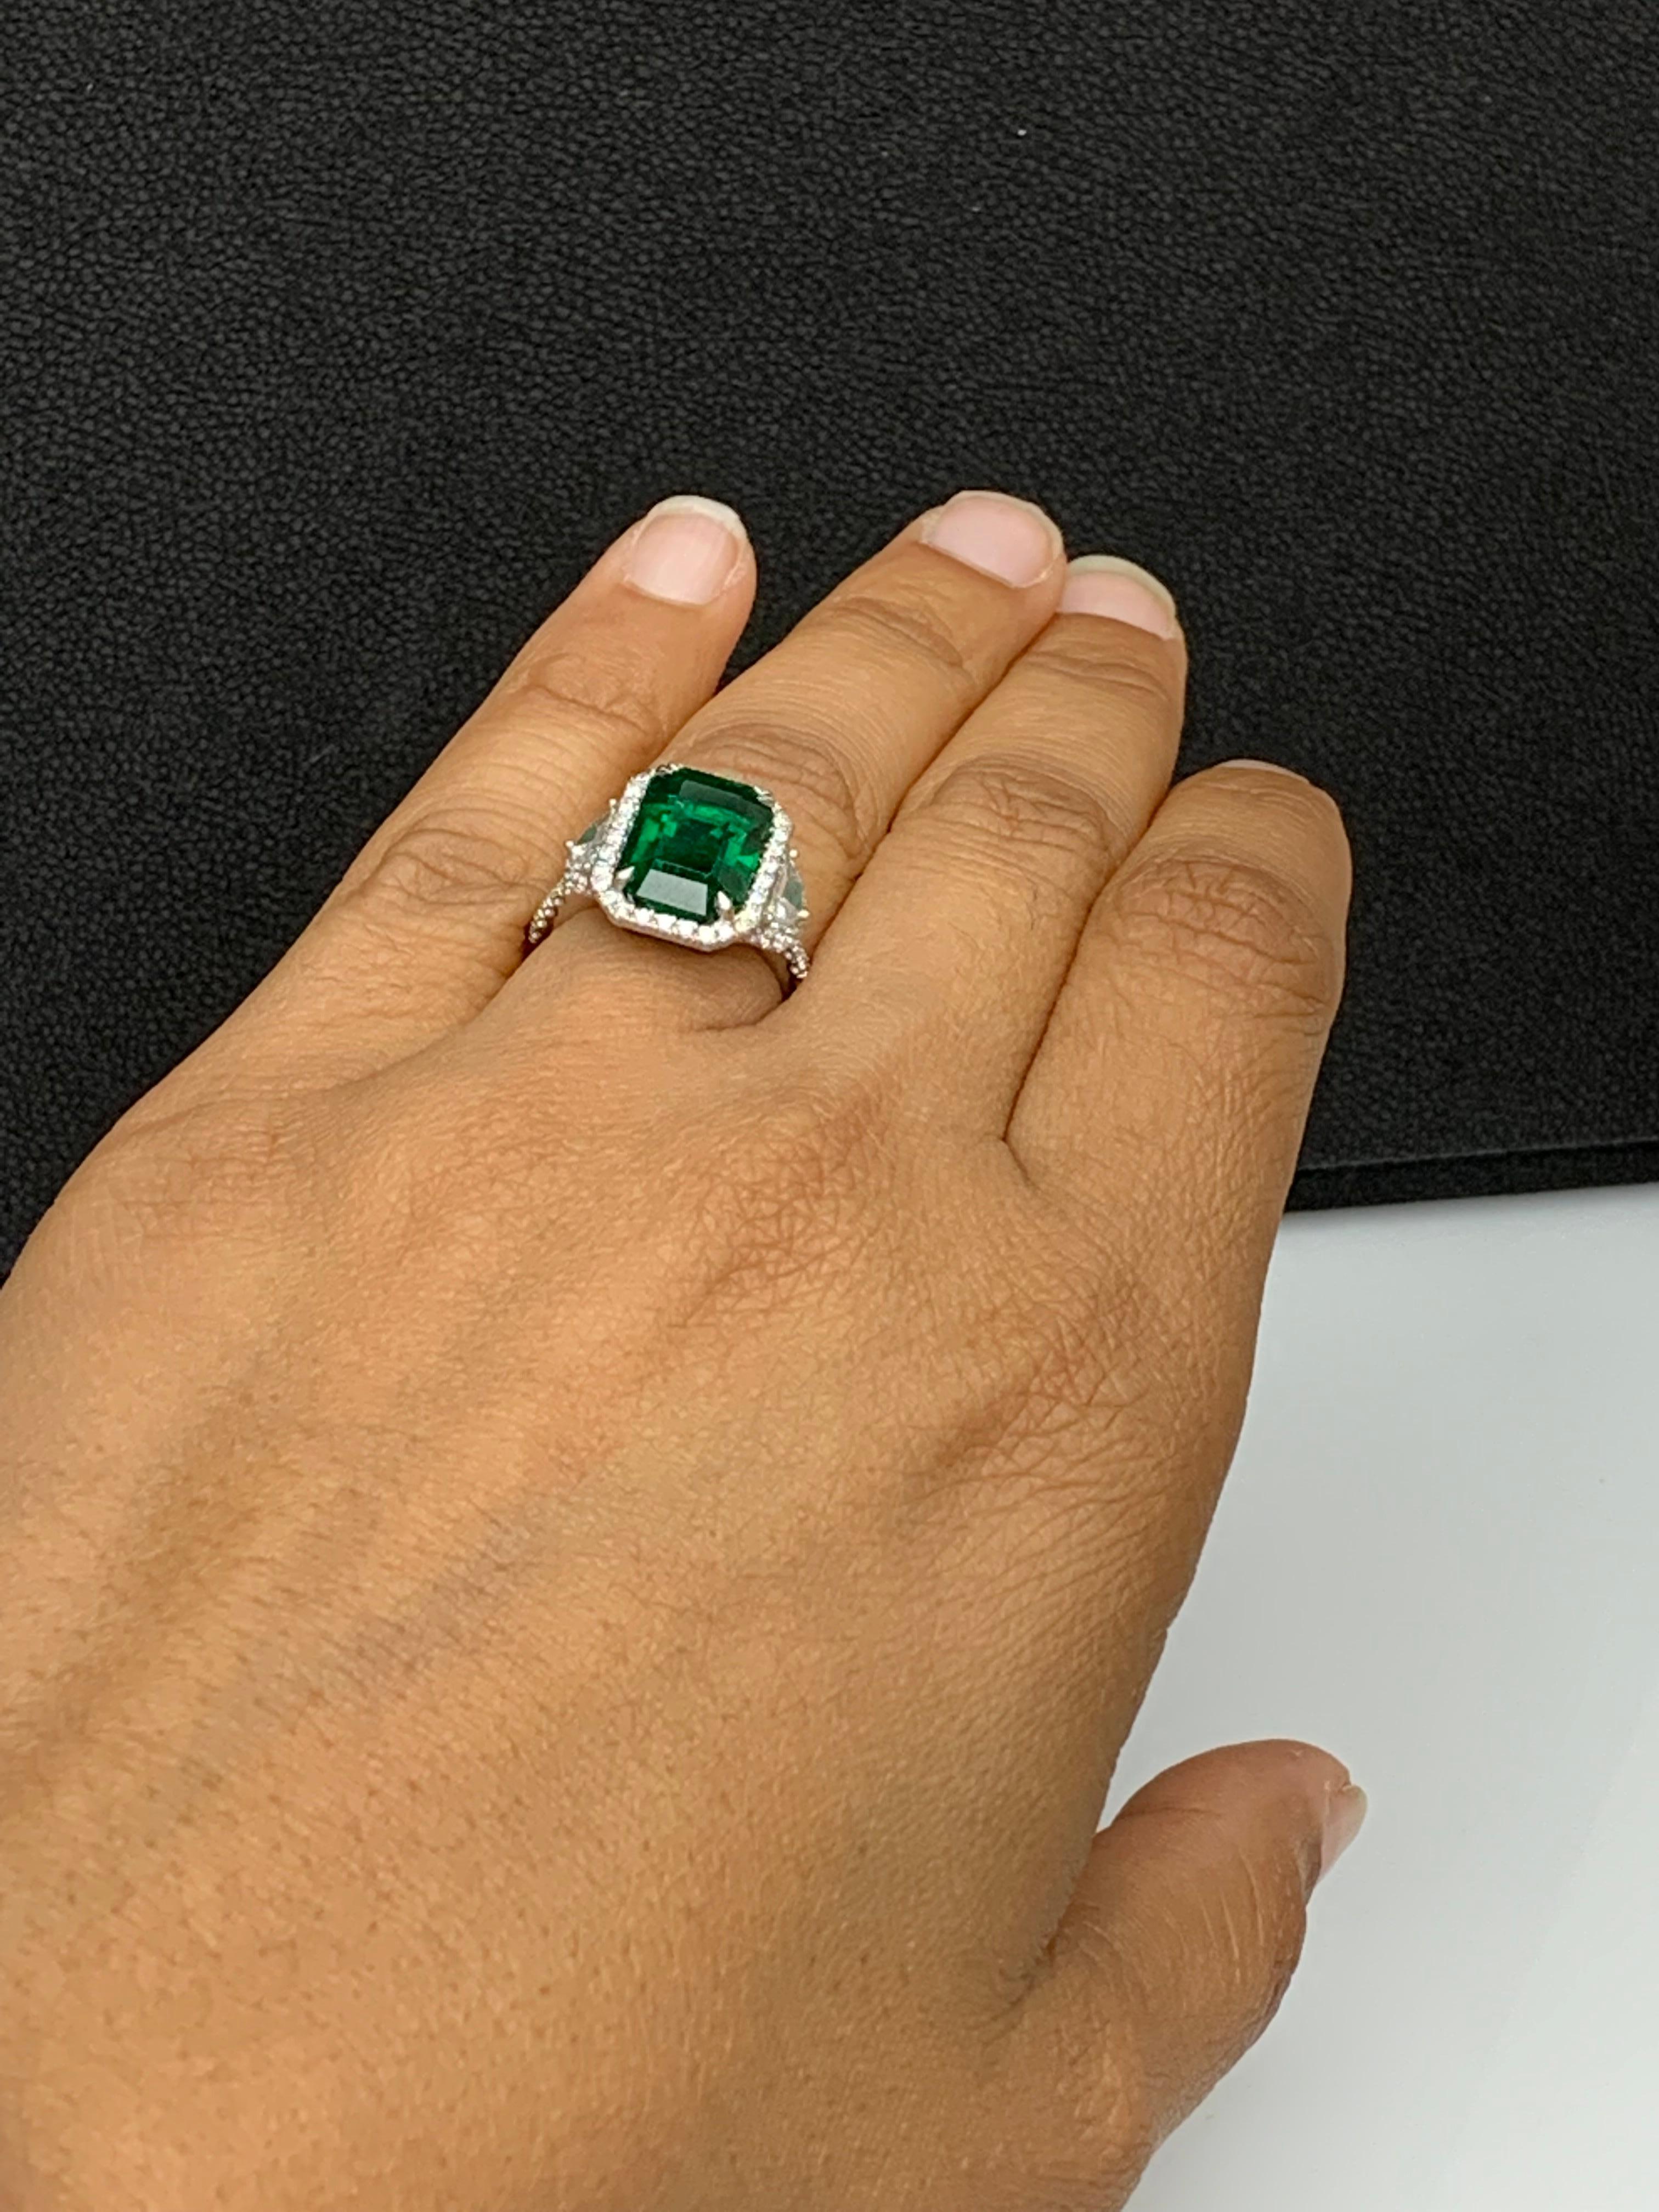 GIA Certified 4.07 Carat Emerald Cut Emerald Diamond 3 Stone Ring in Platinum For Sale 12